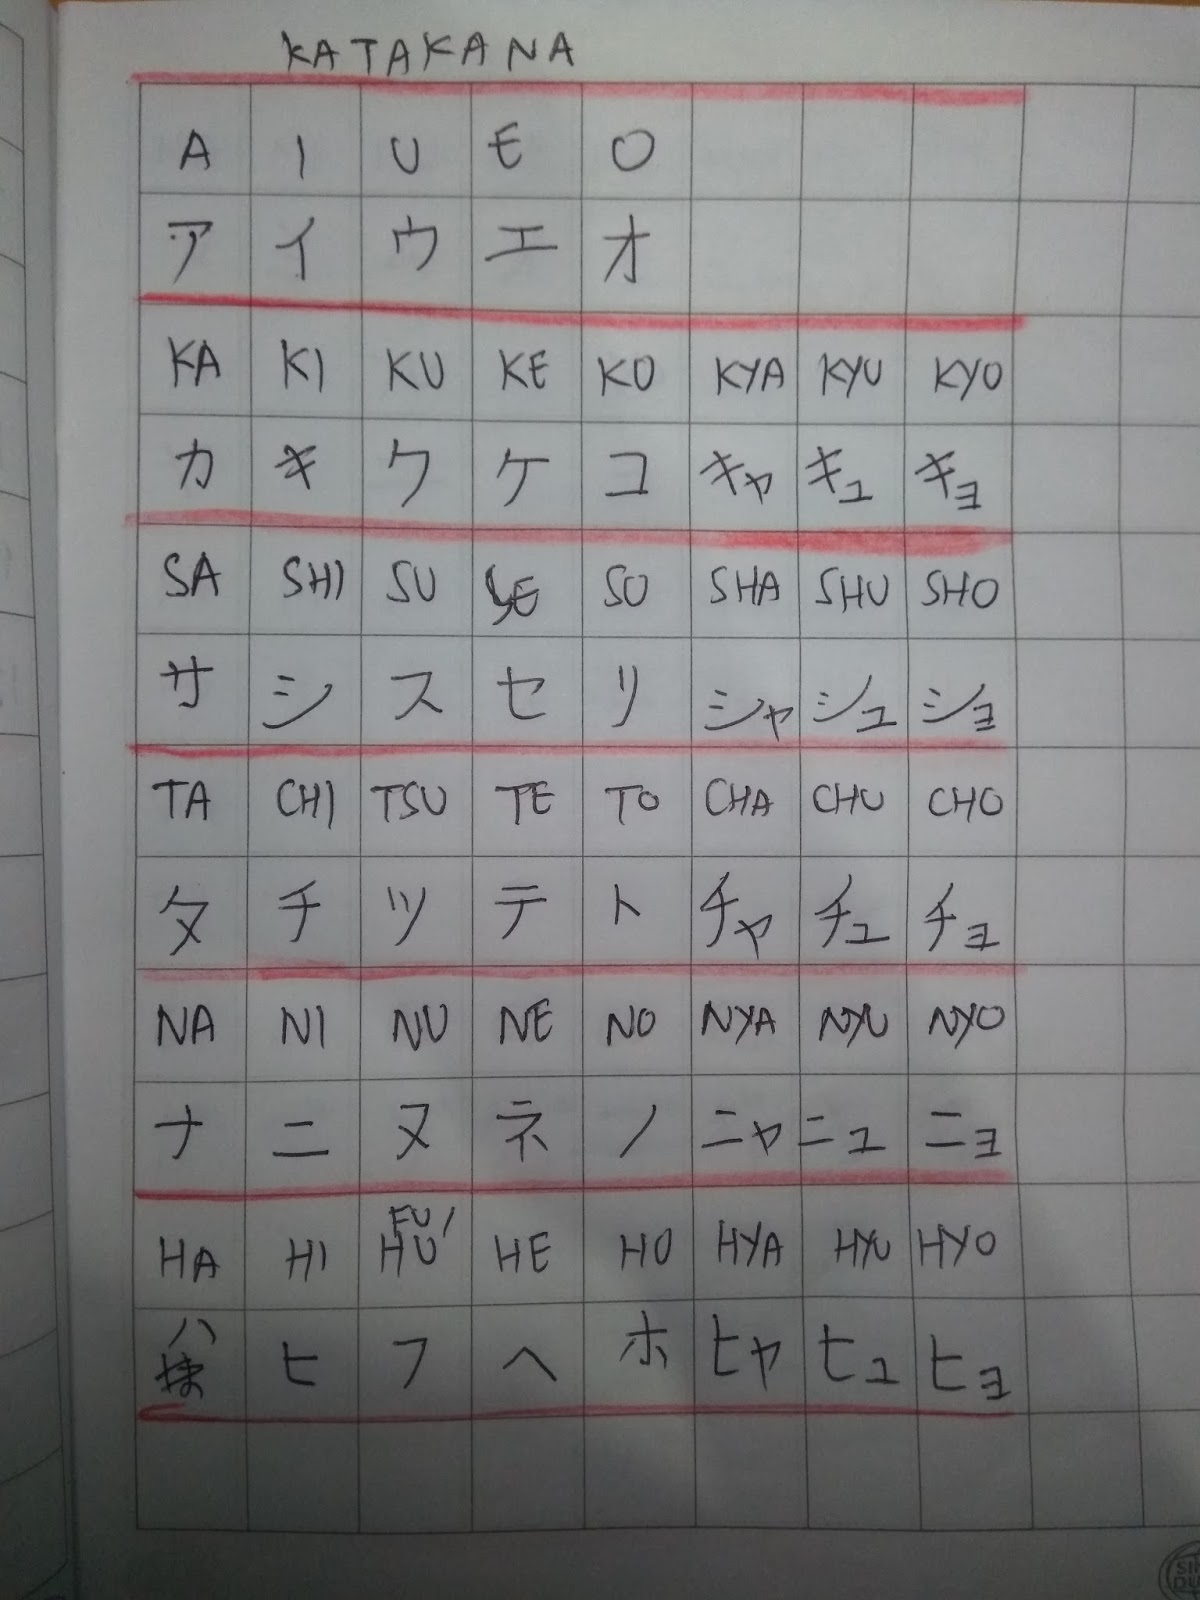 Untuk huruf Kanji belum dibahas di sini berhubung saya masih membiasakan menggunakan Hiragana dan Katakana dulu Nanti kalau kira kira sudah bisa dimulai